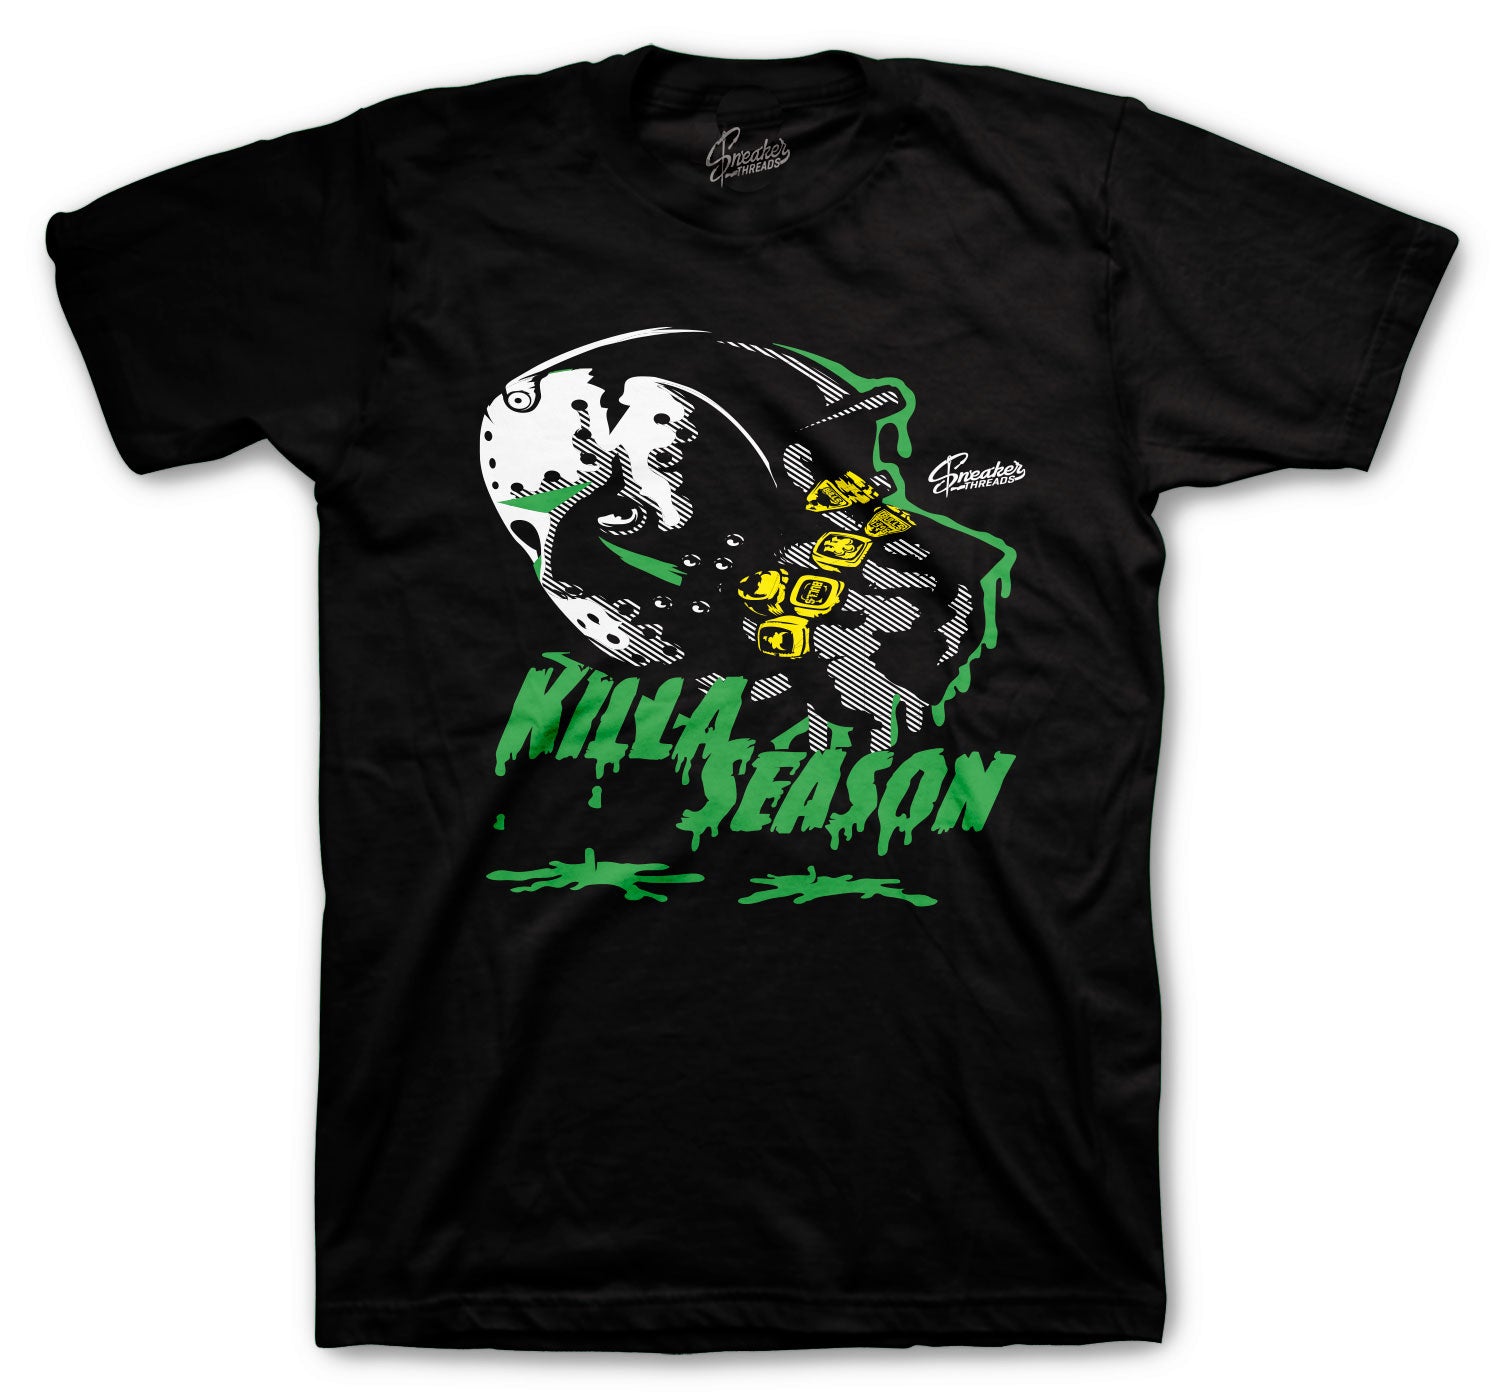 Retro 13 Lucky Green Shirt - Killa Season - Black